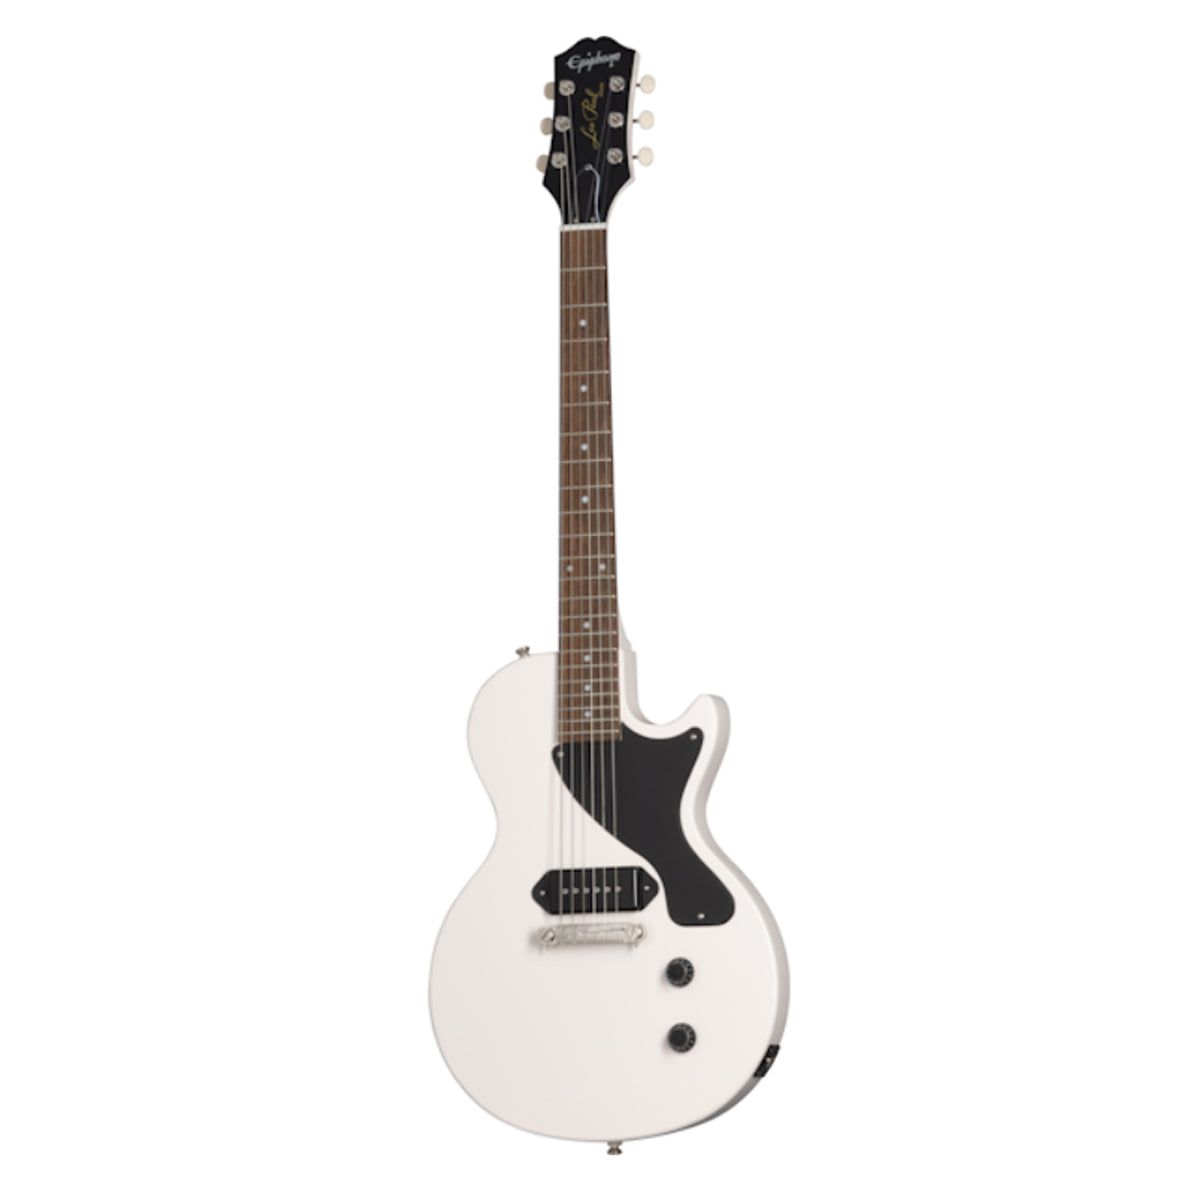 Epiphone Billie Joe Armstrong Signature Les Paul Junior Electric Guitar White w/ Case